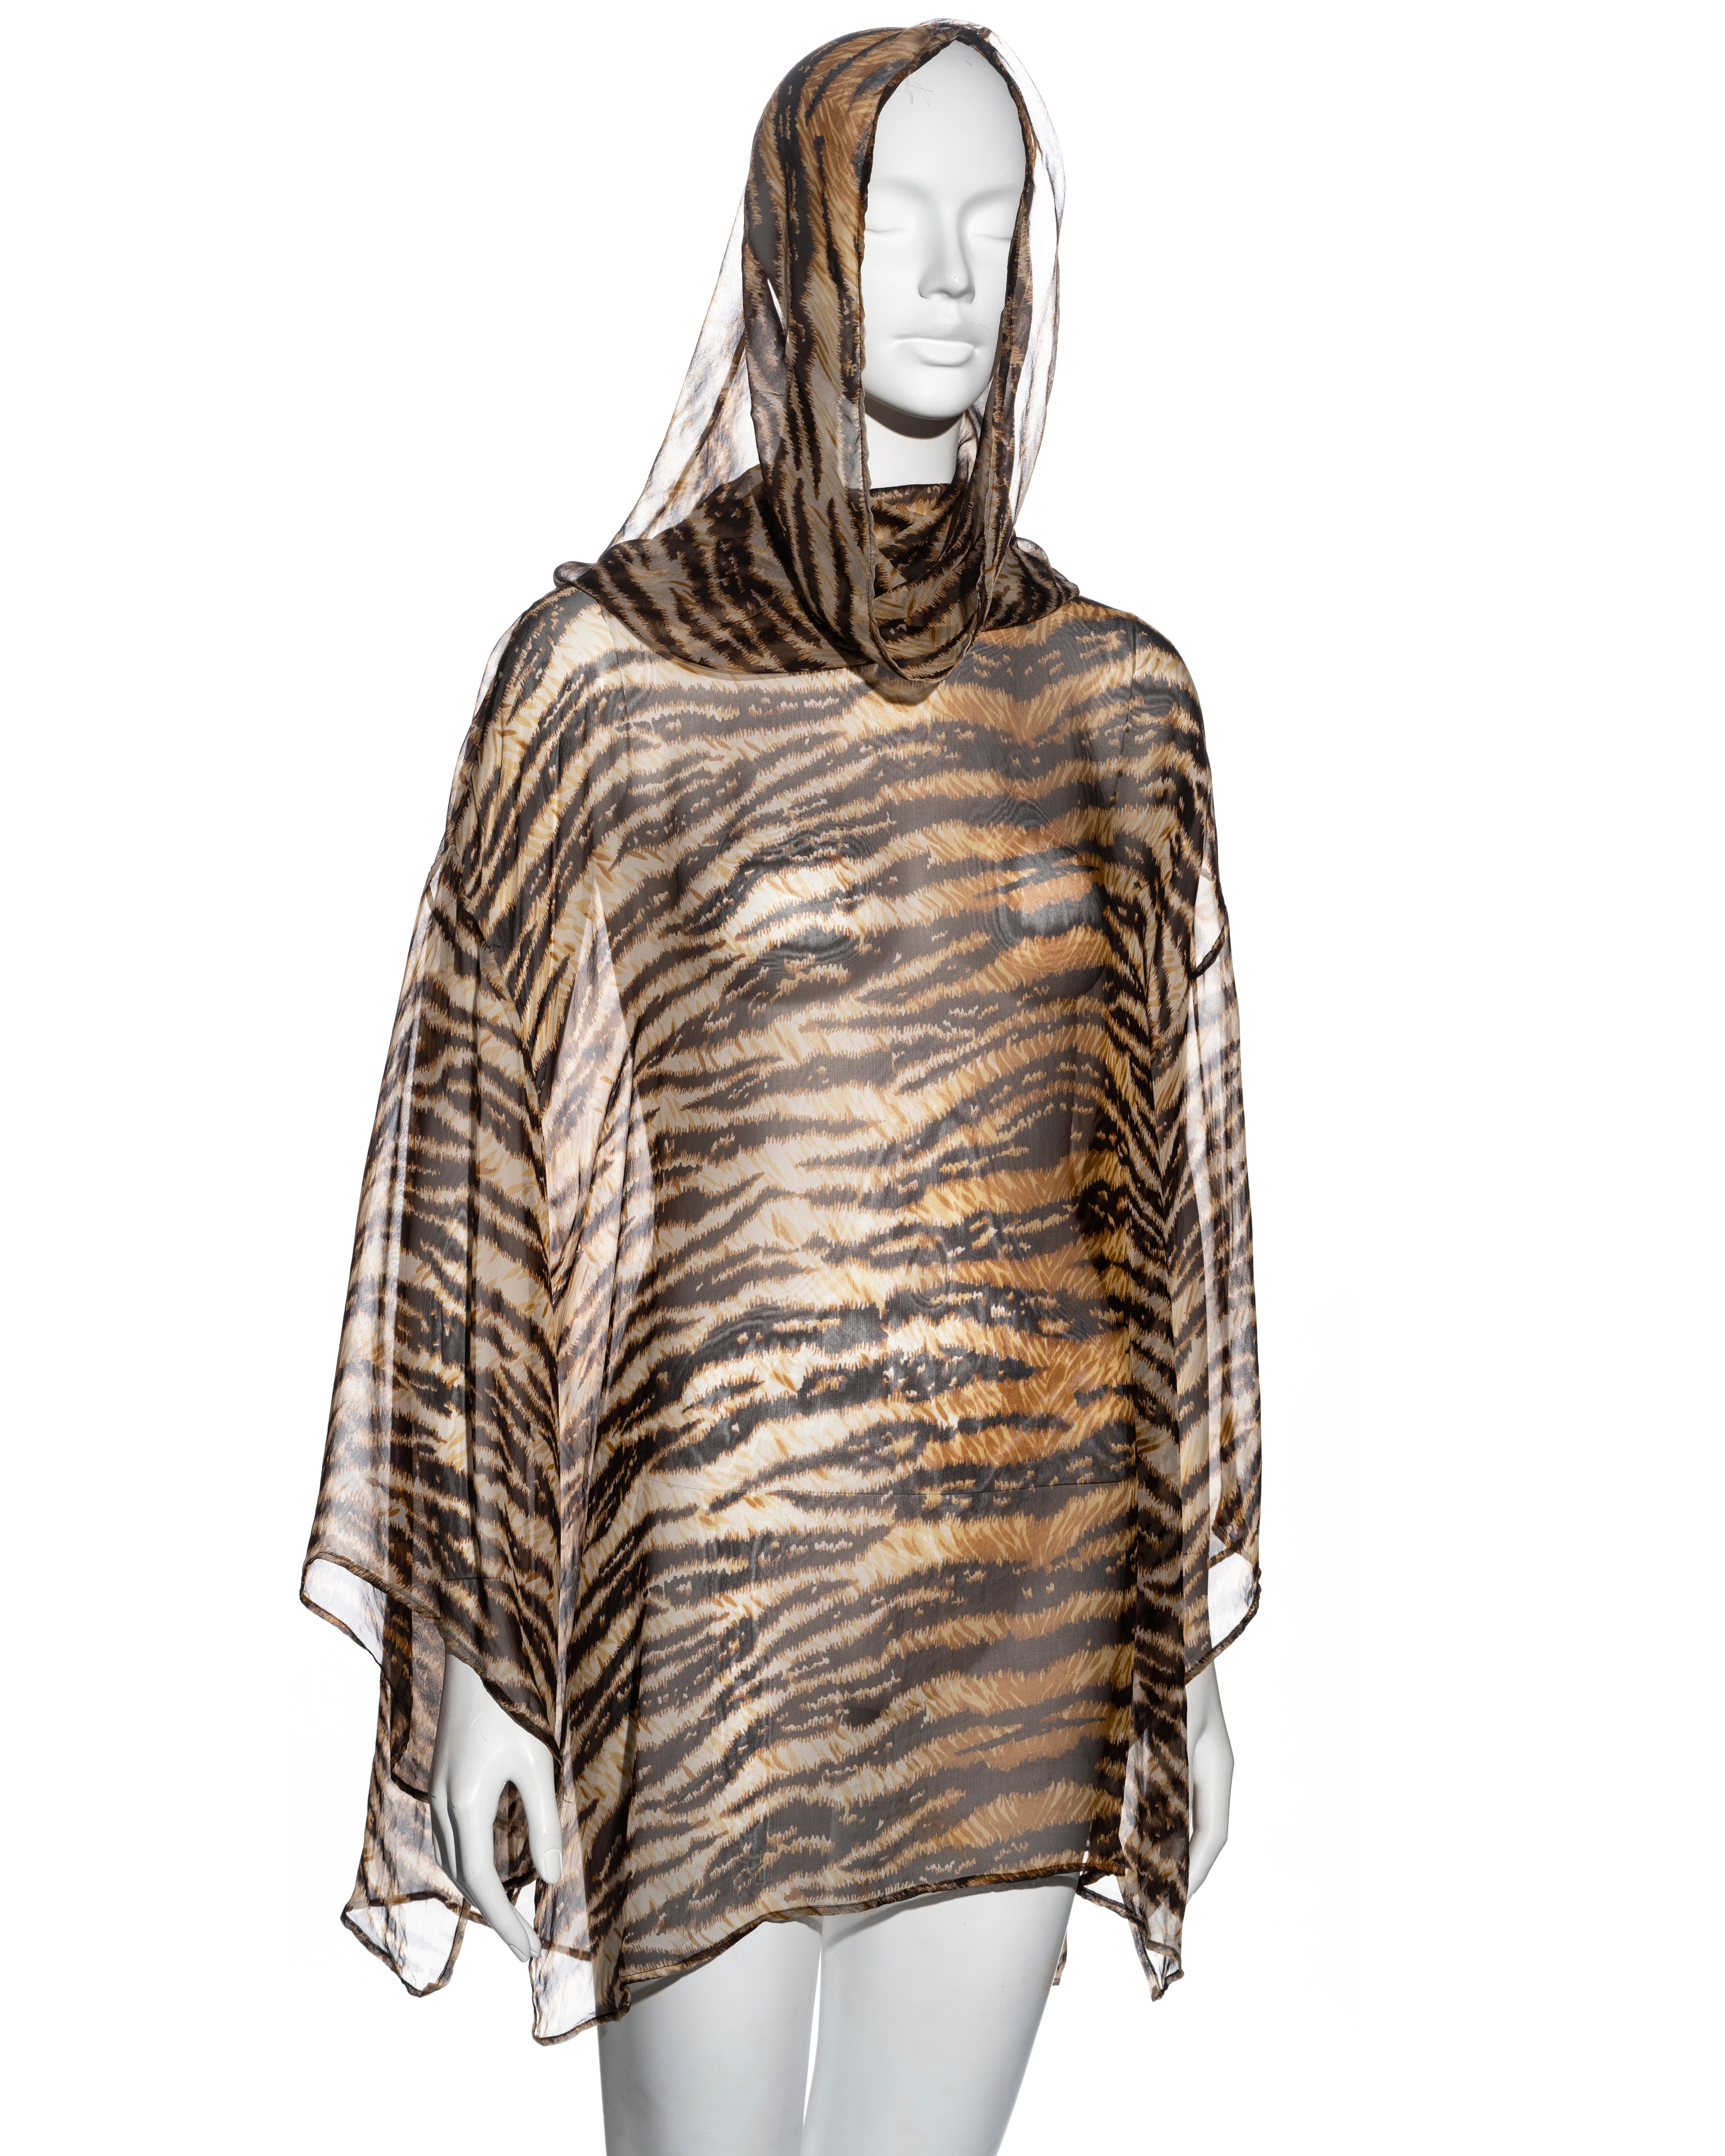 Women's Dolce & Gabbana tiger print silk chiffon hooded tunic dress, ss 1996